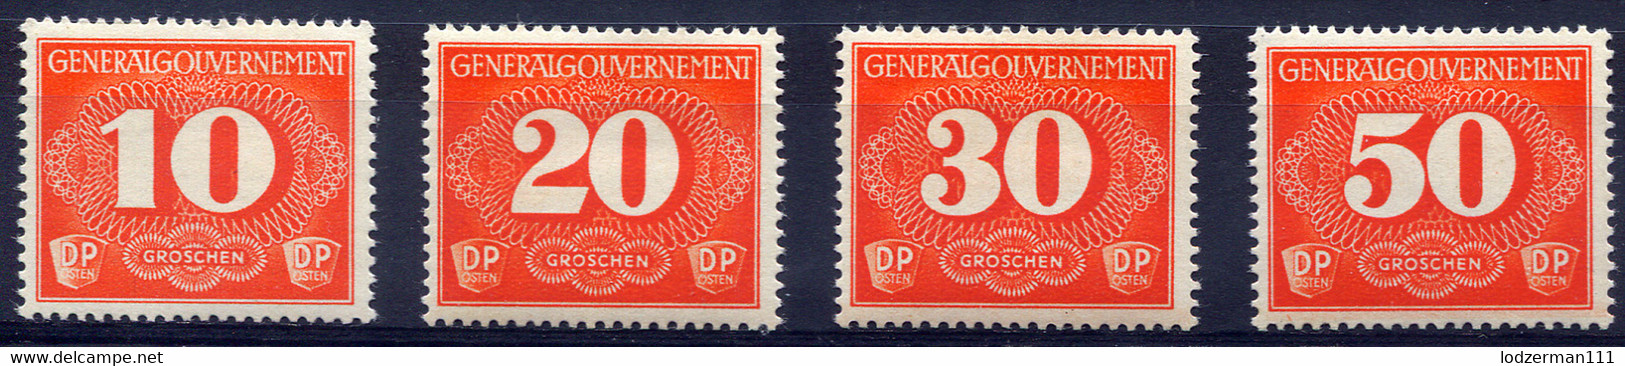 GG Zustellungsmarken 1940 - Mi.1-4 MNH (postfrisch) All VF (perfect) - Generalregierung